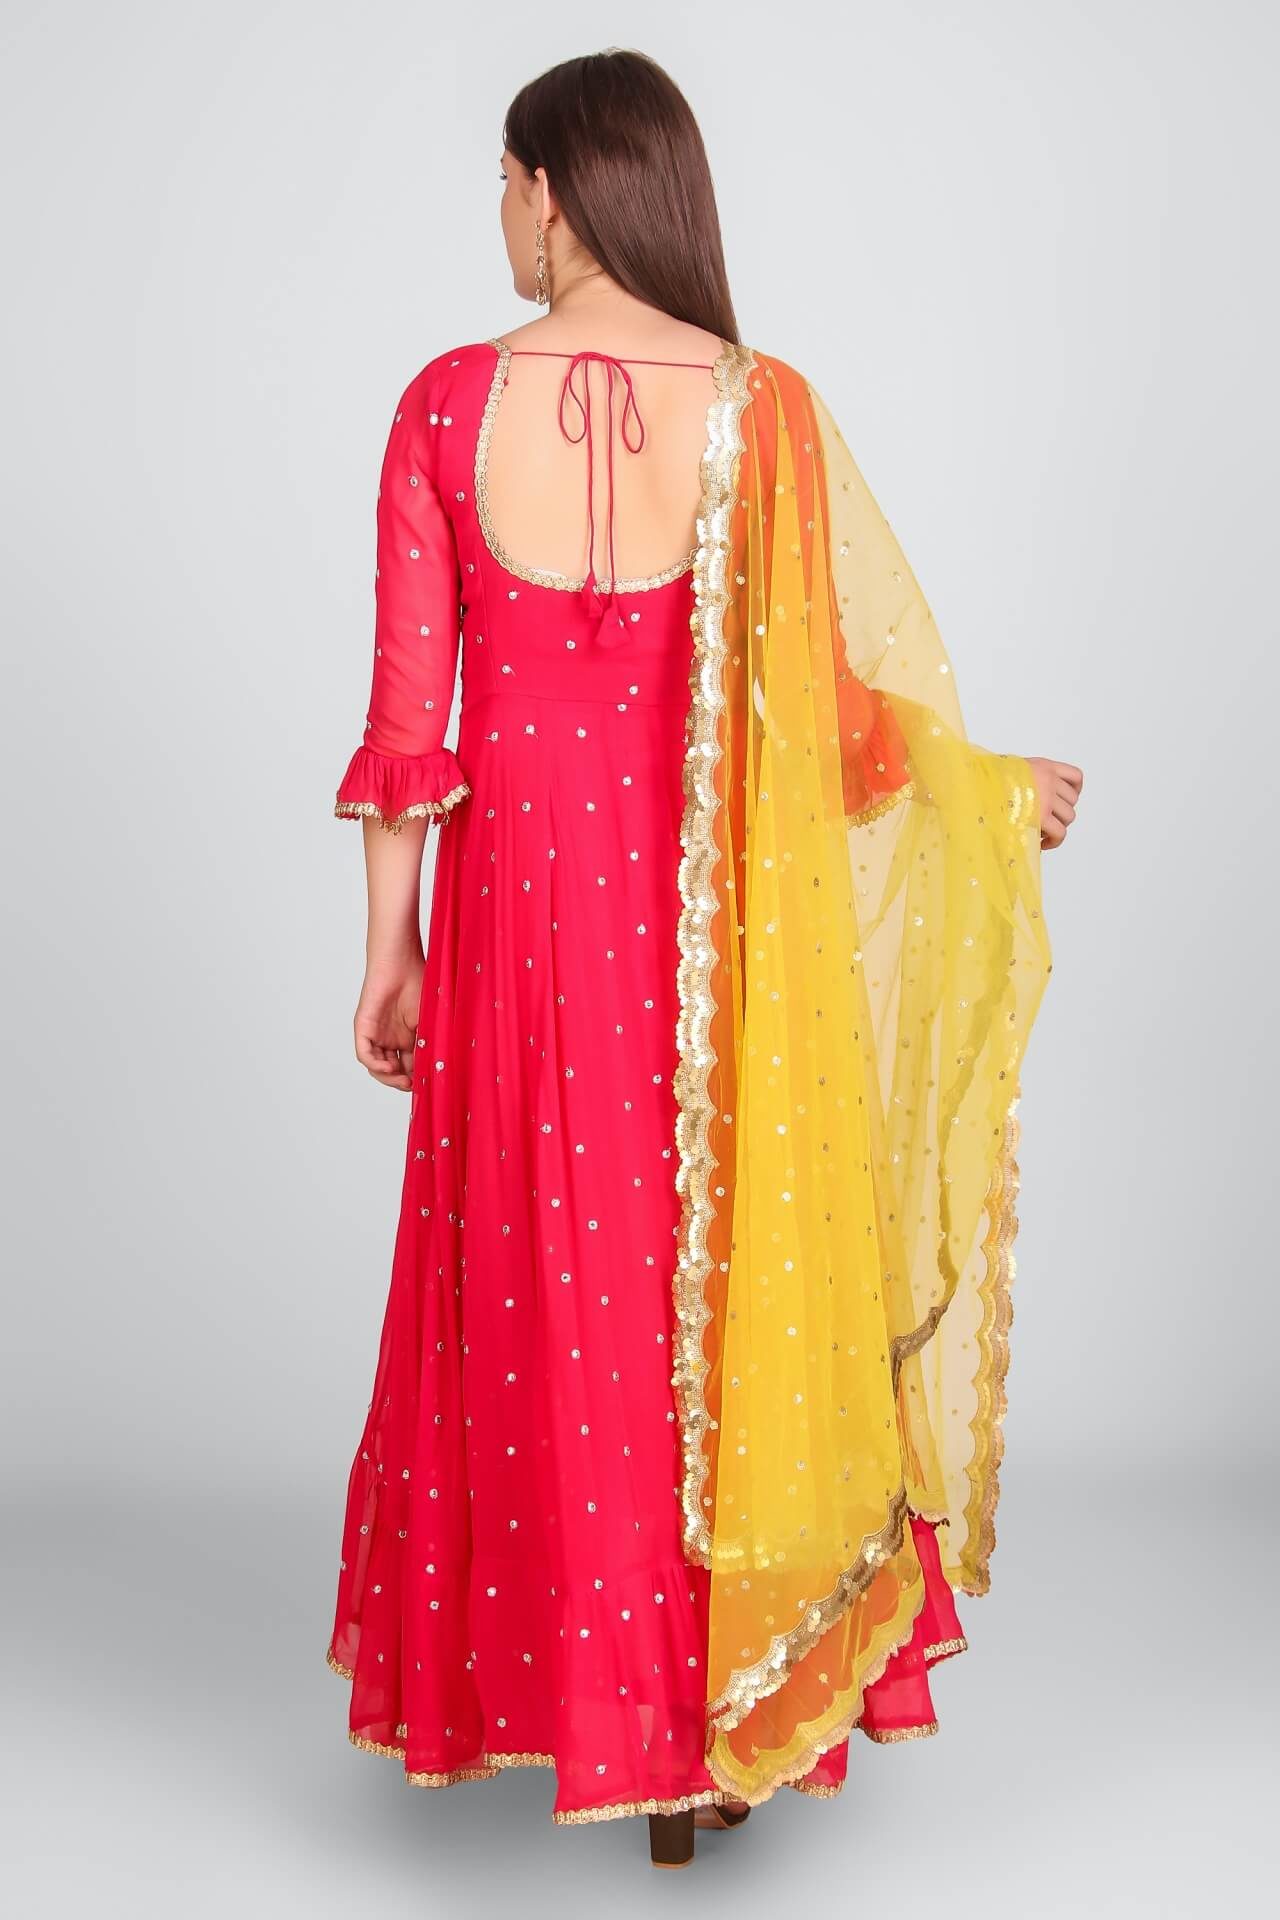 Hot Pink Mukaish Anarkali With Yellow Sequins Dupatta